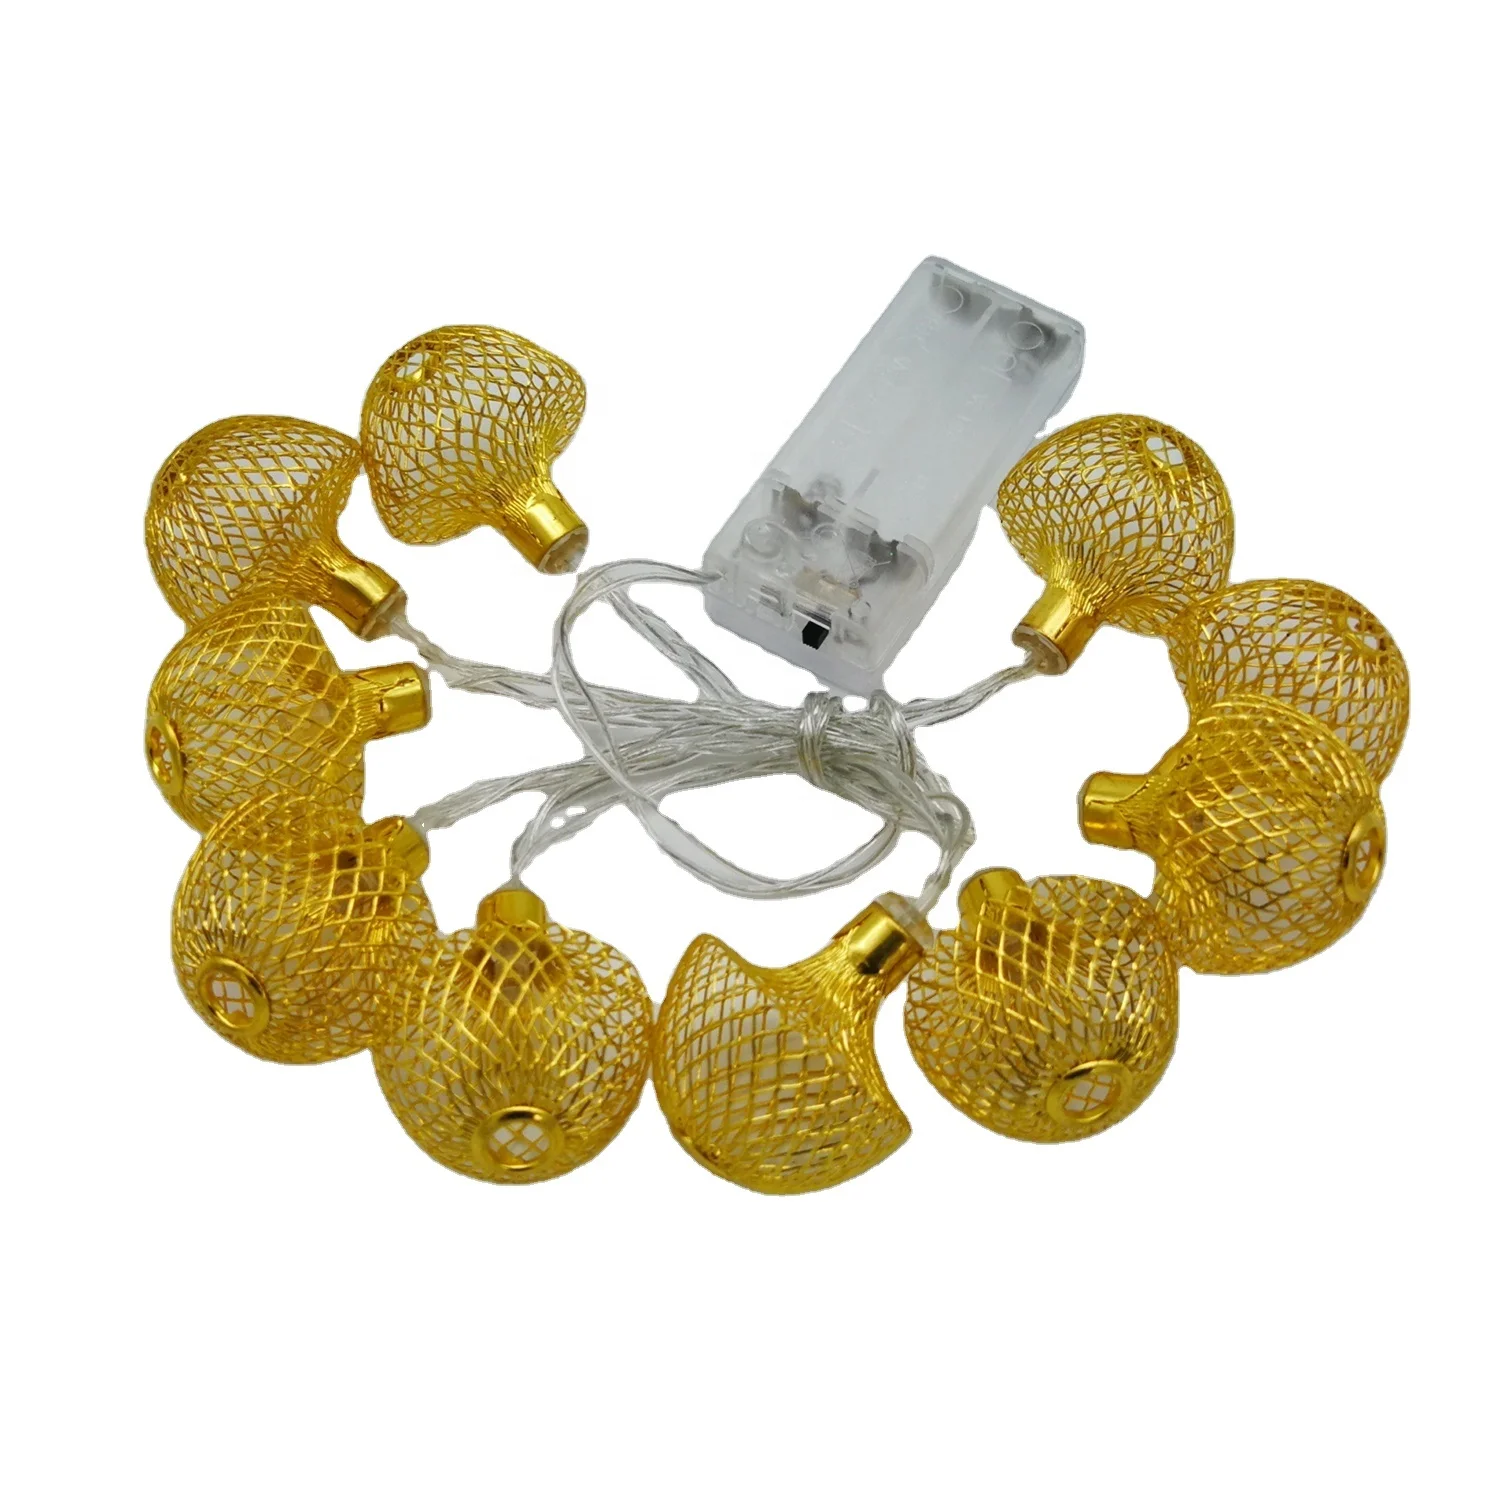 Wholesale Price Indoor Decoration Golden Lantern LED Garland String Light